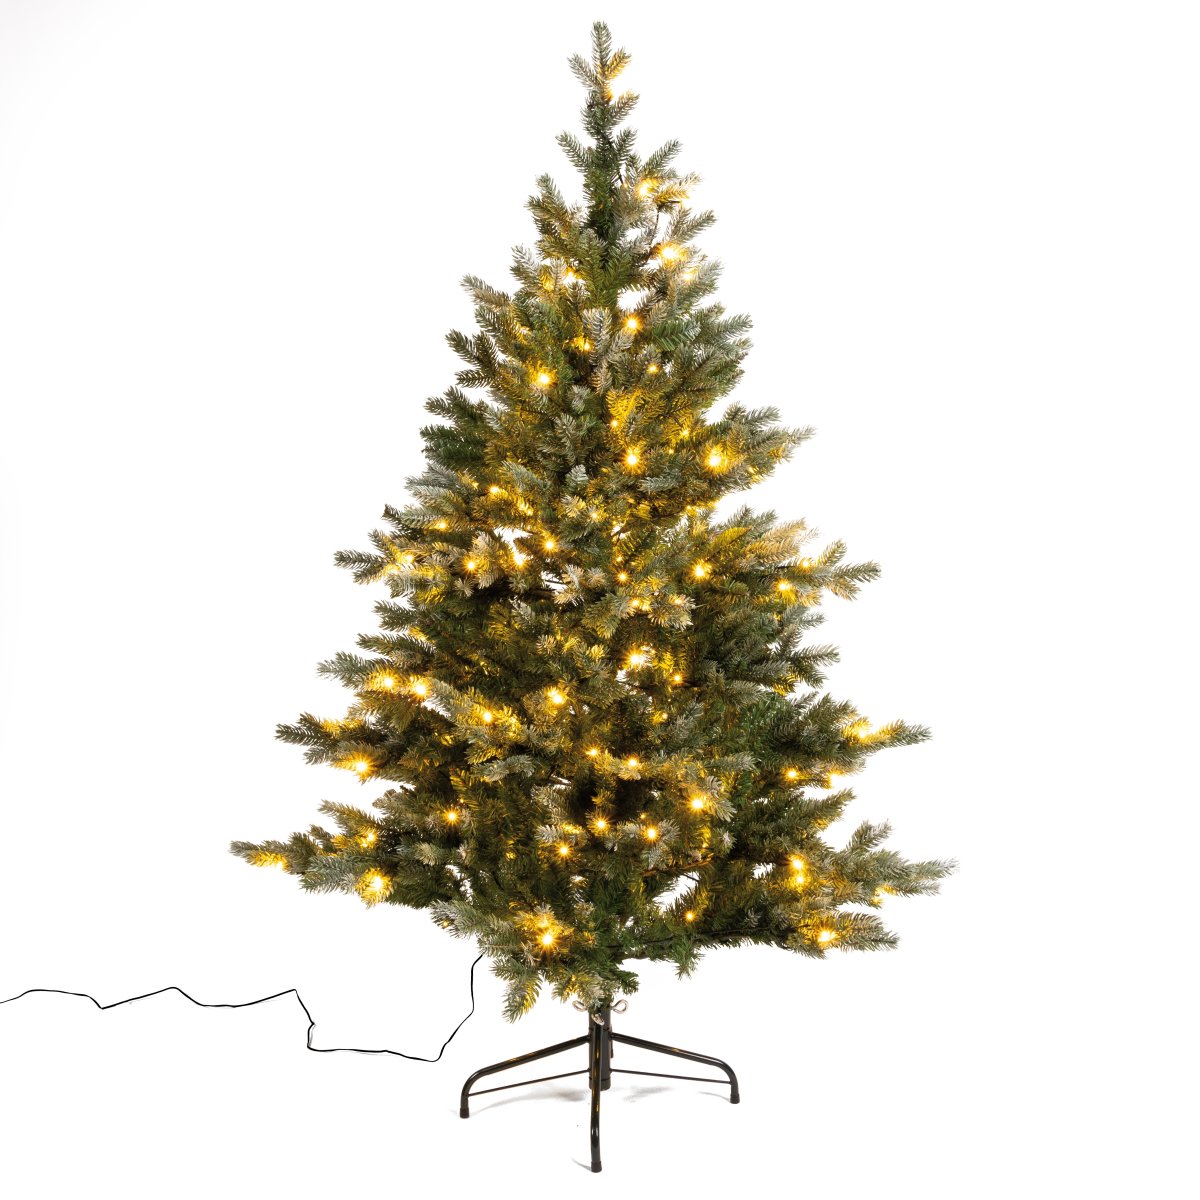 Juletræ LUX inkl. LED lys - 150 cm, Grøn/Sne